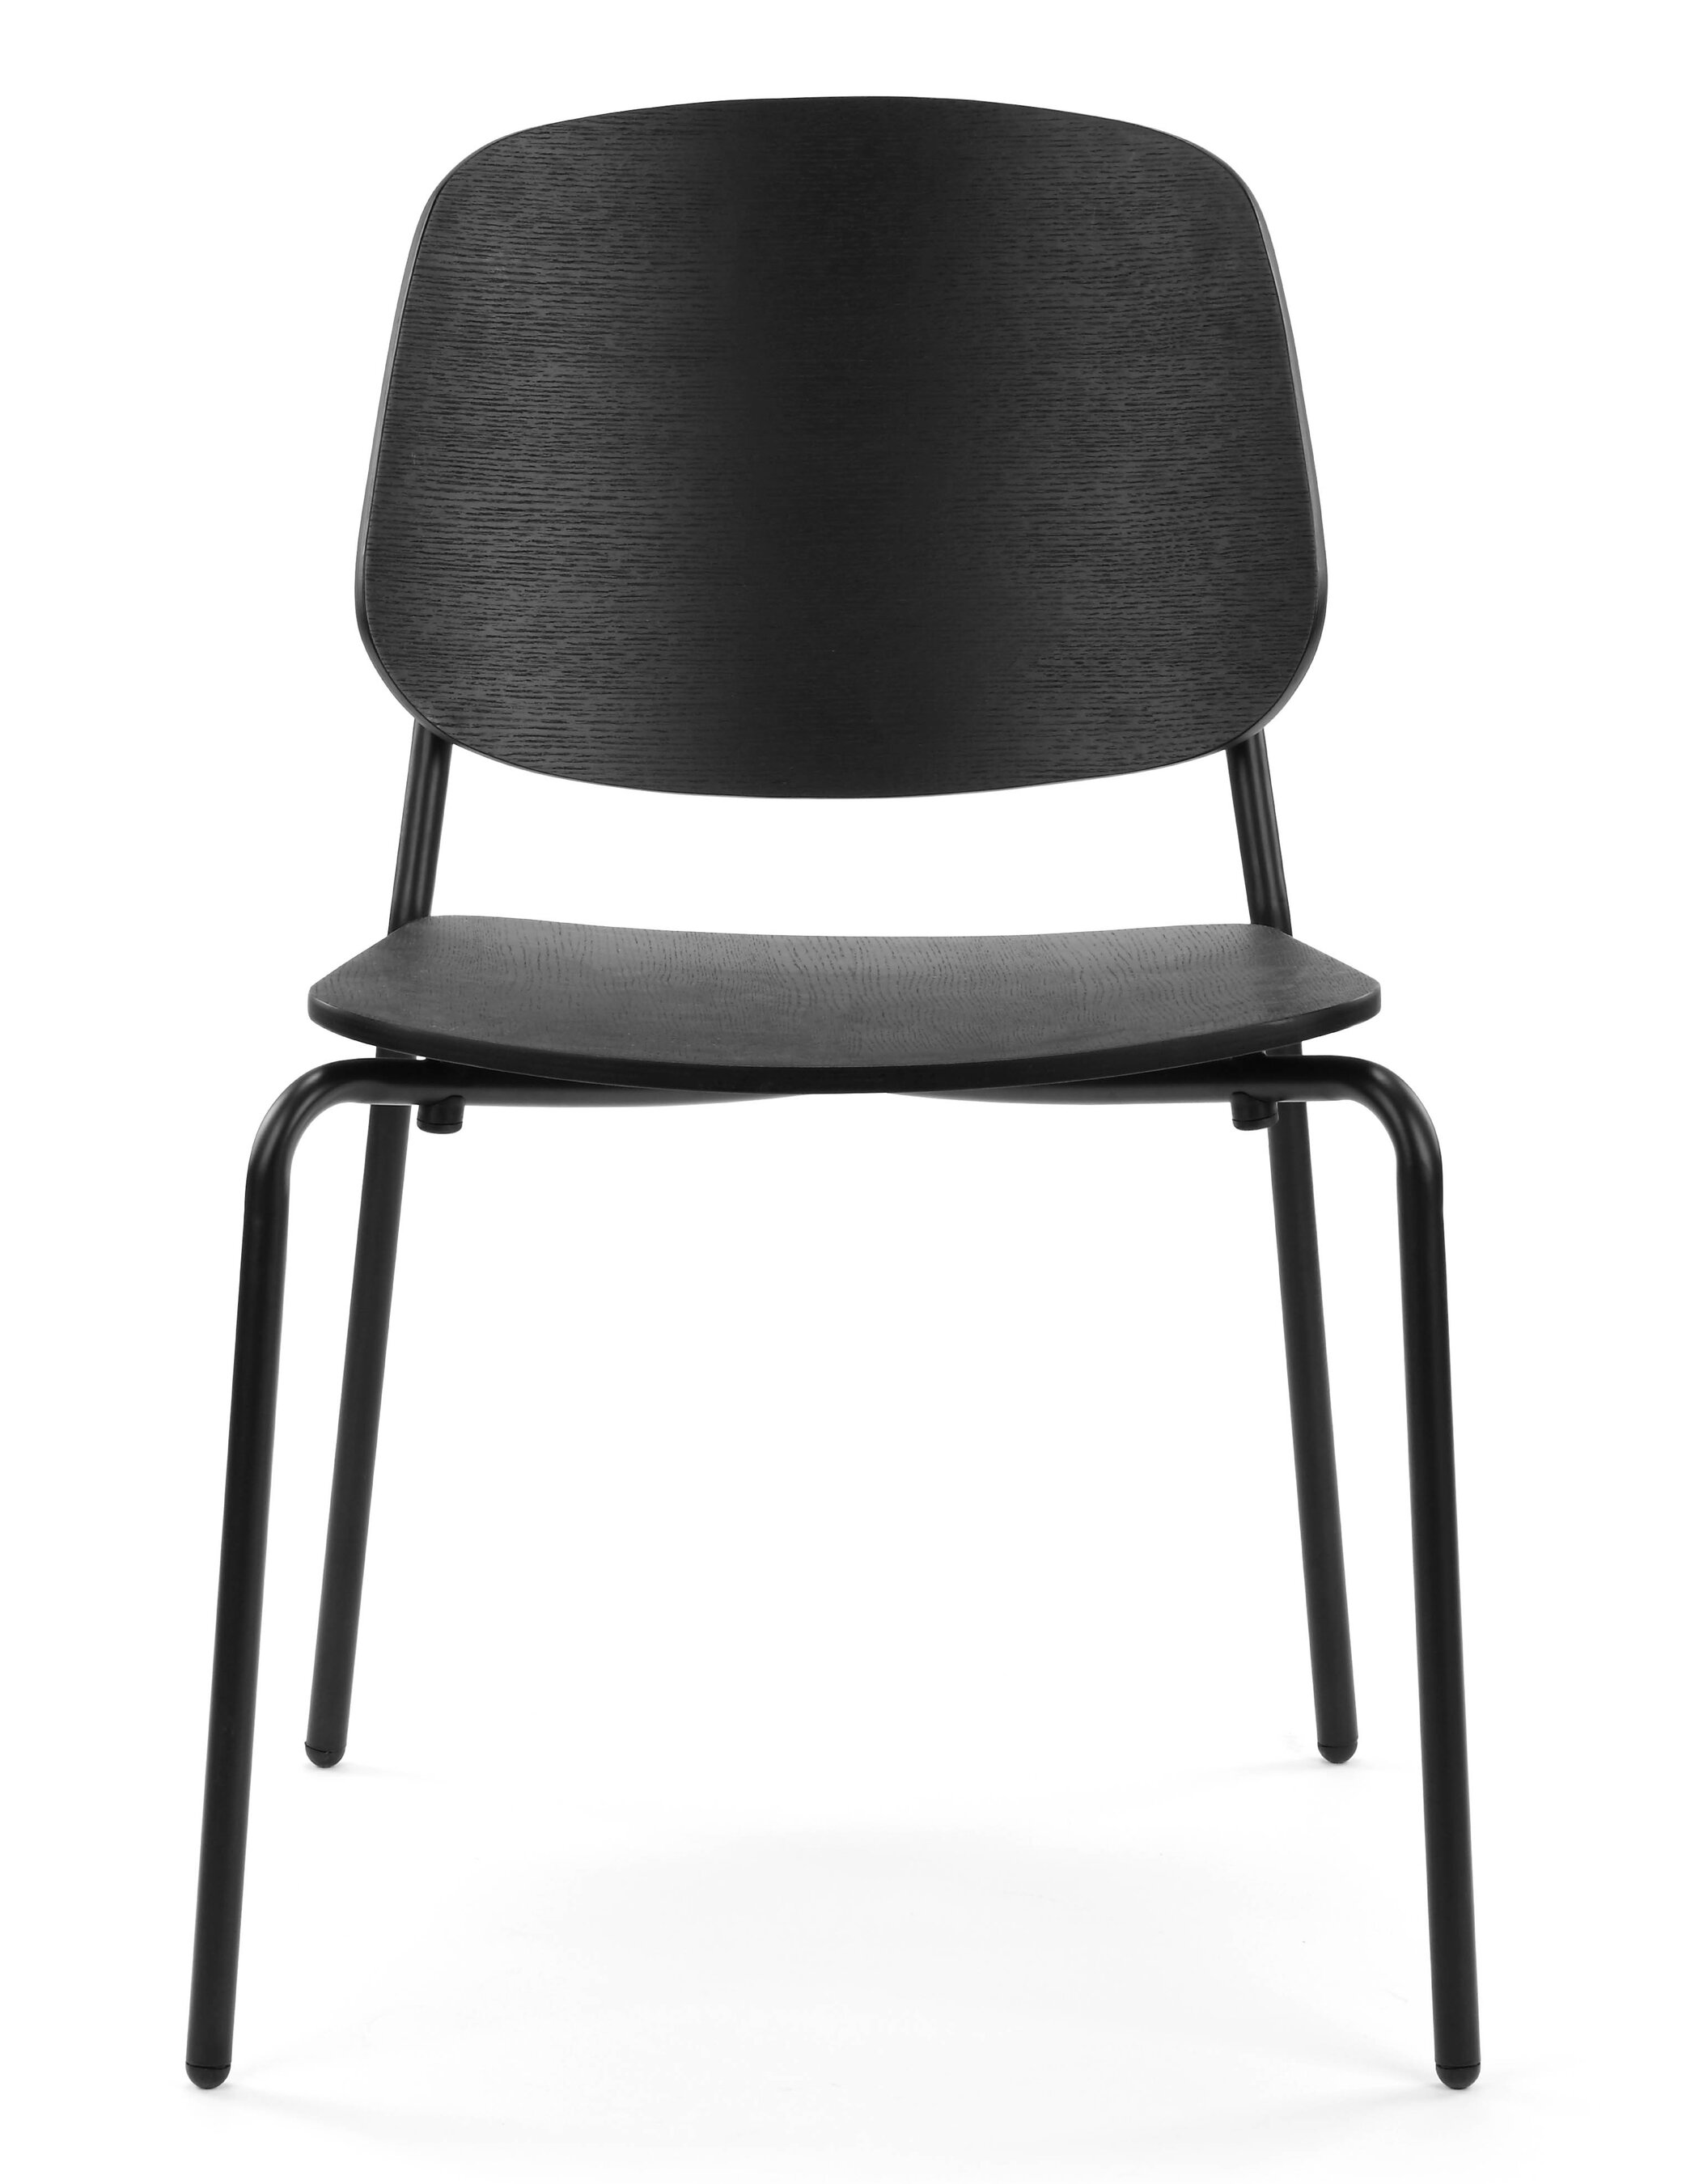 WS - Platform chair - Black ash (Front)